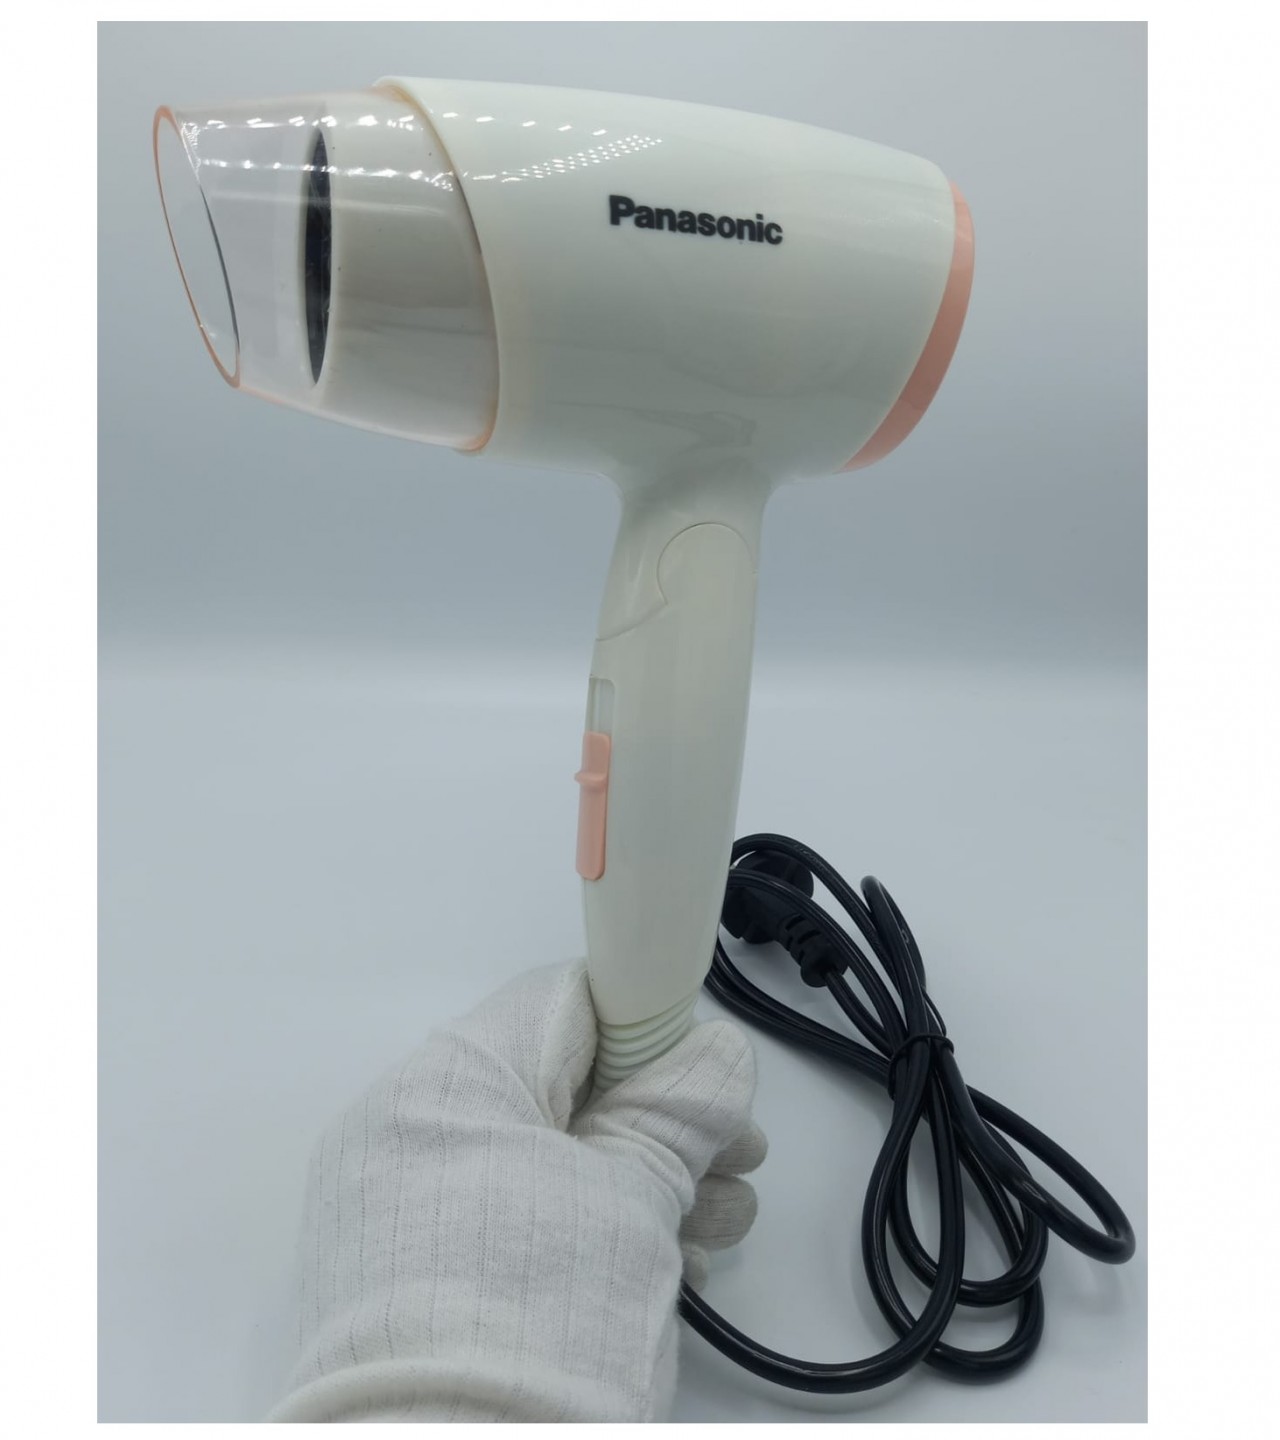 Panasonic Hair Dryer D-506